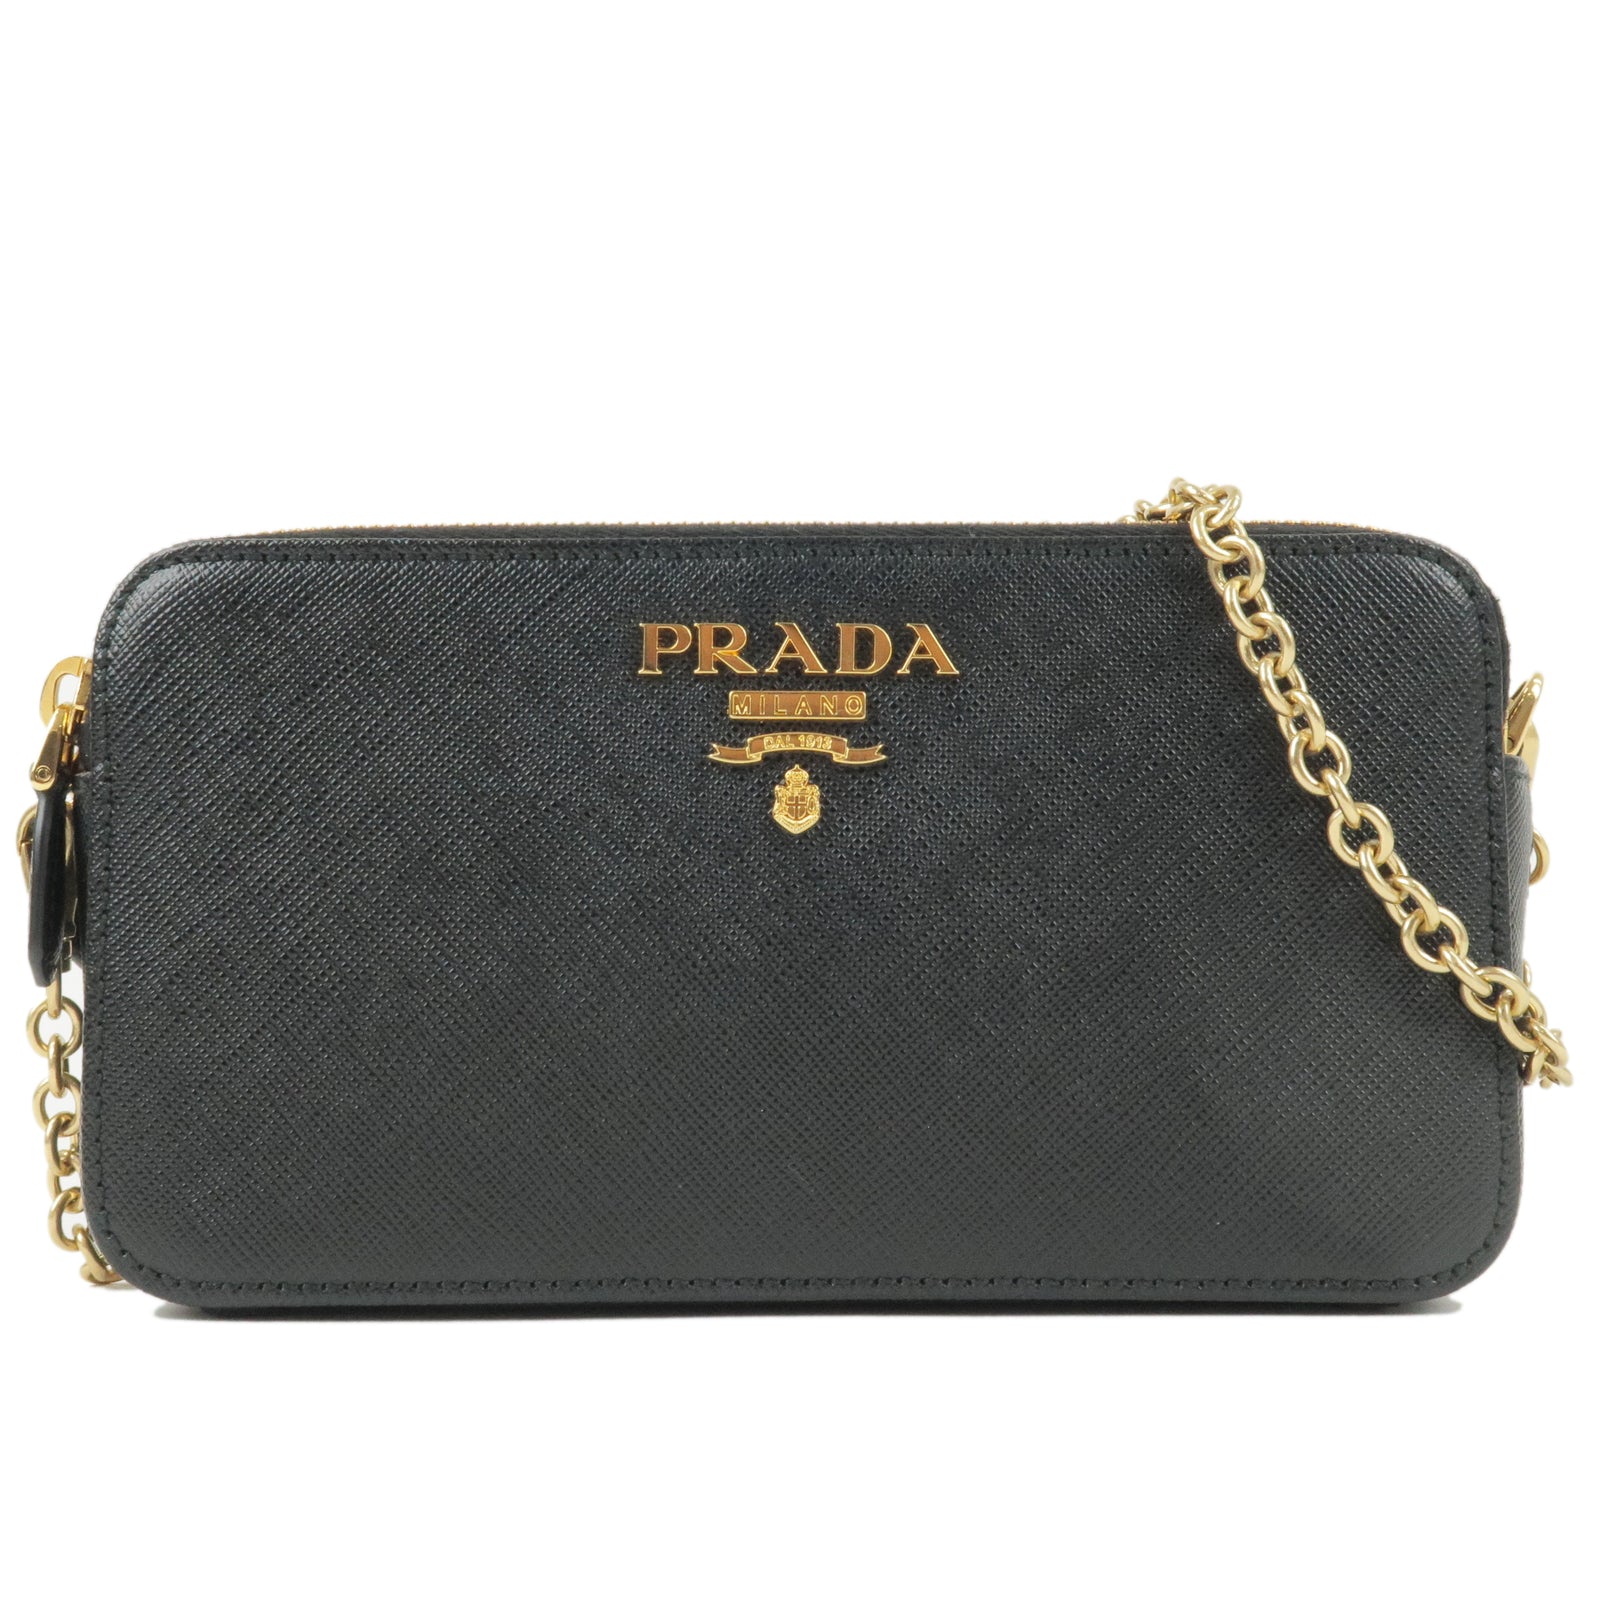 100% Authentic Prada Saffiano Vernic Leather Nero Mini Shoulder/Crossbody  Bag!